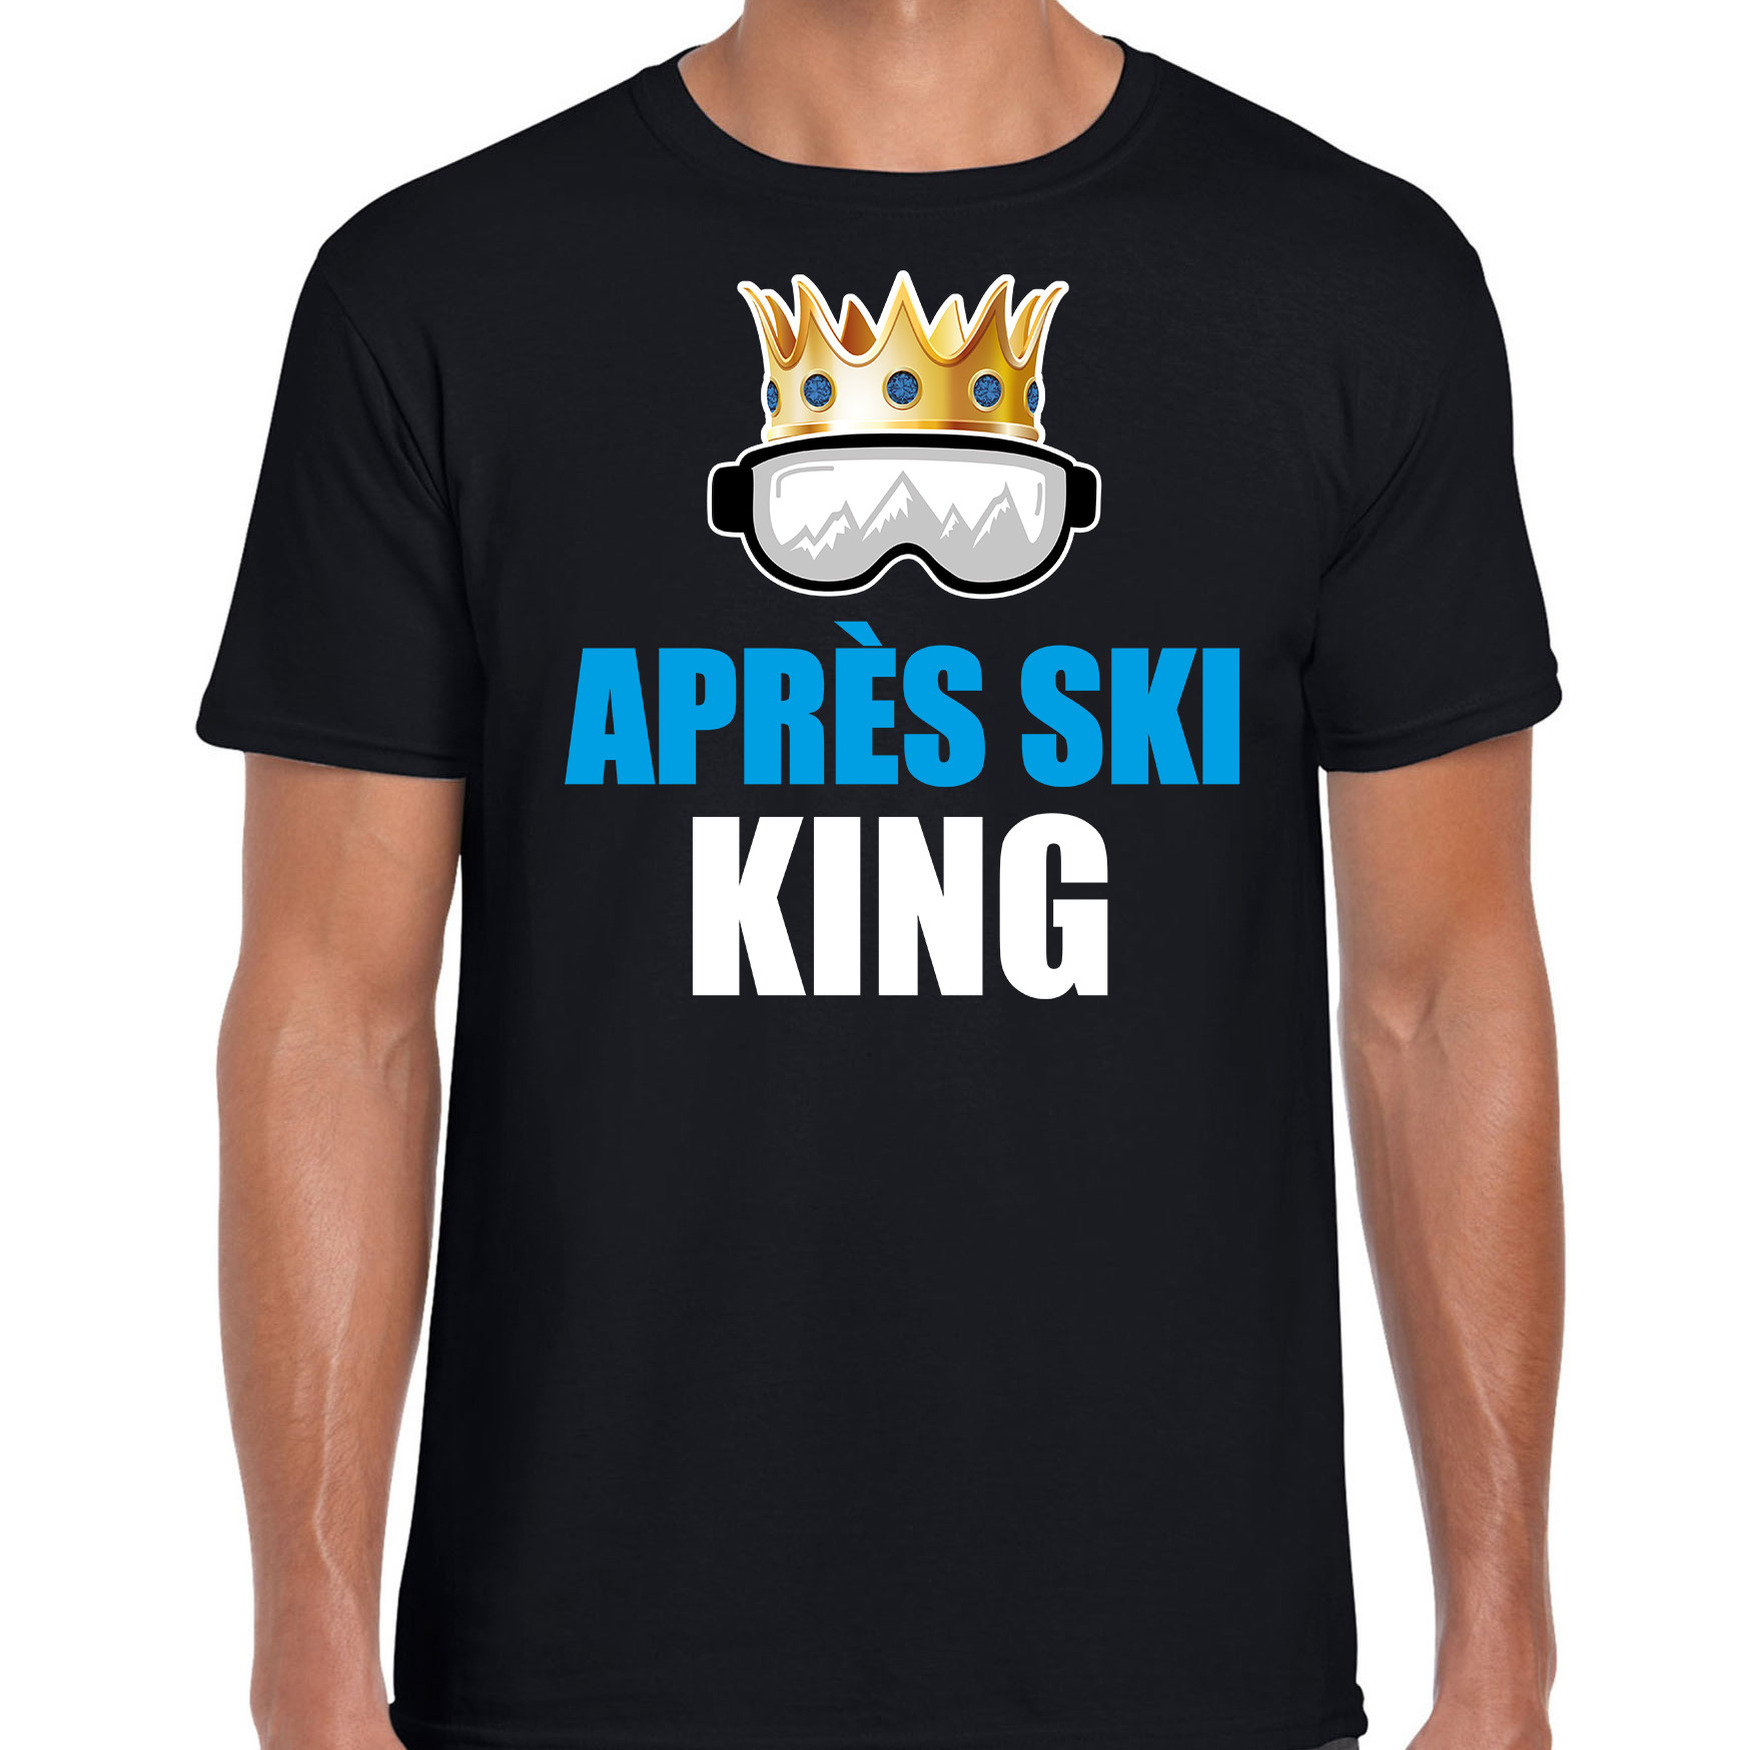 Apres ski t-shirt Apres ski King zwart heren Wintersport shirt Foute apres ski outfit